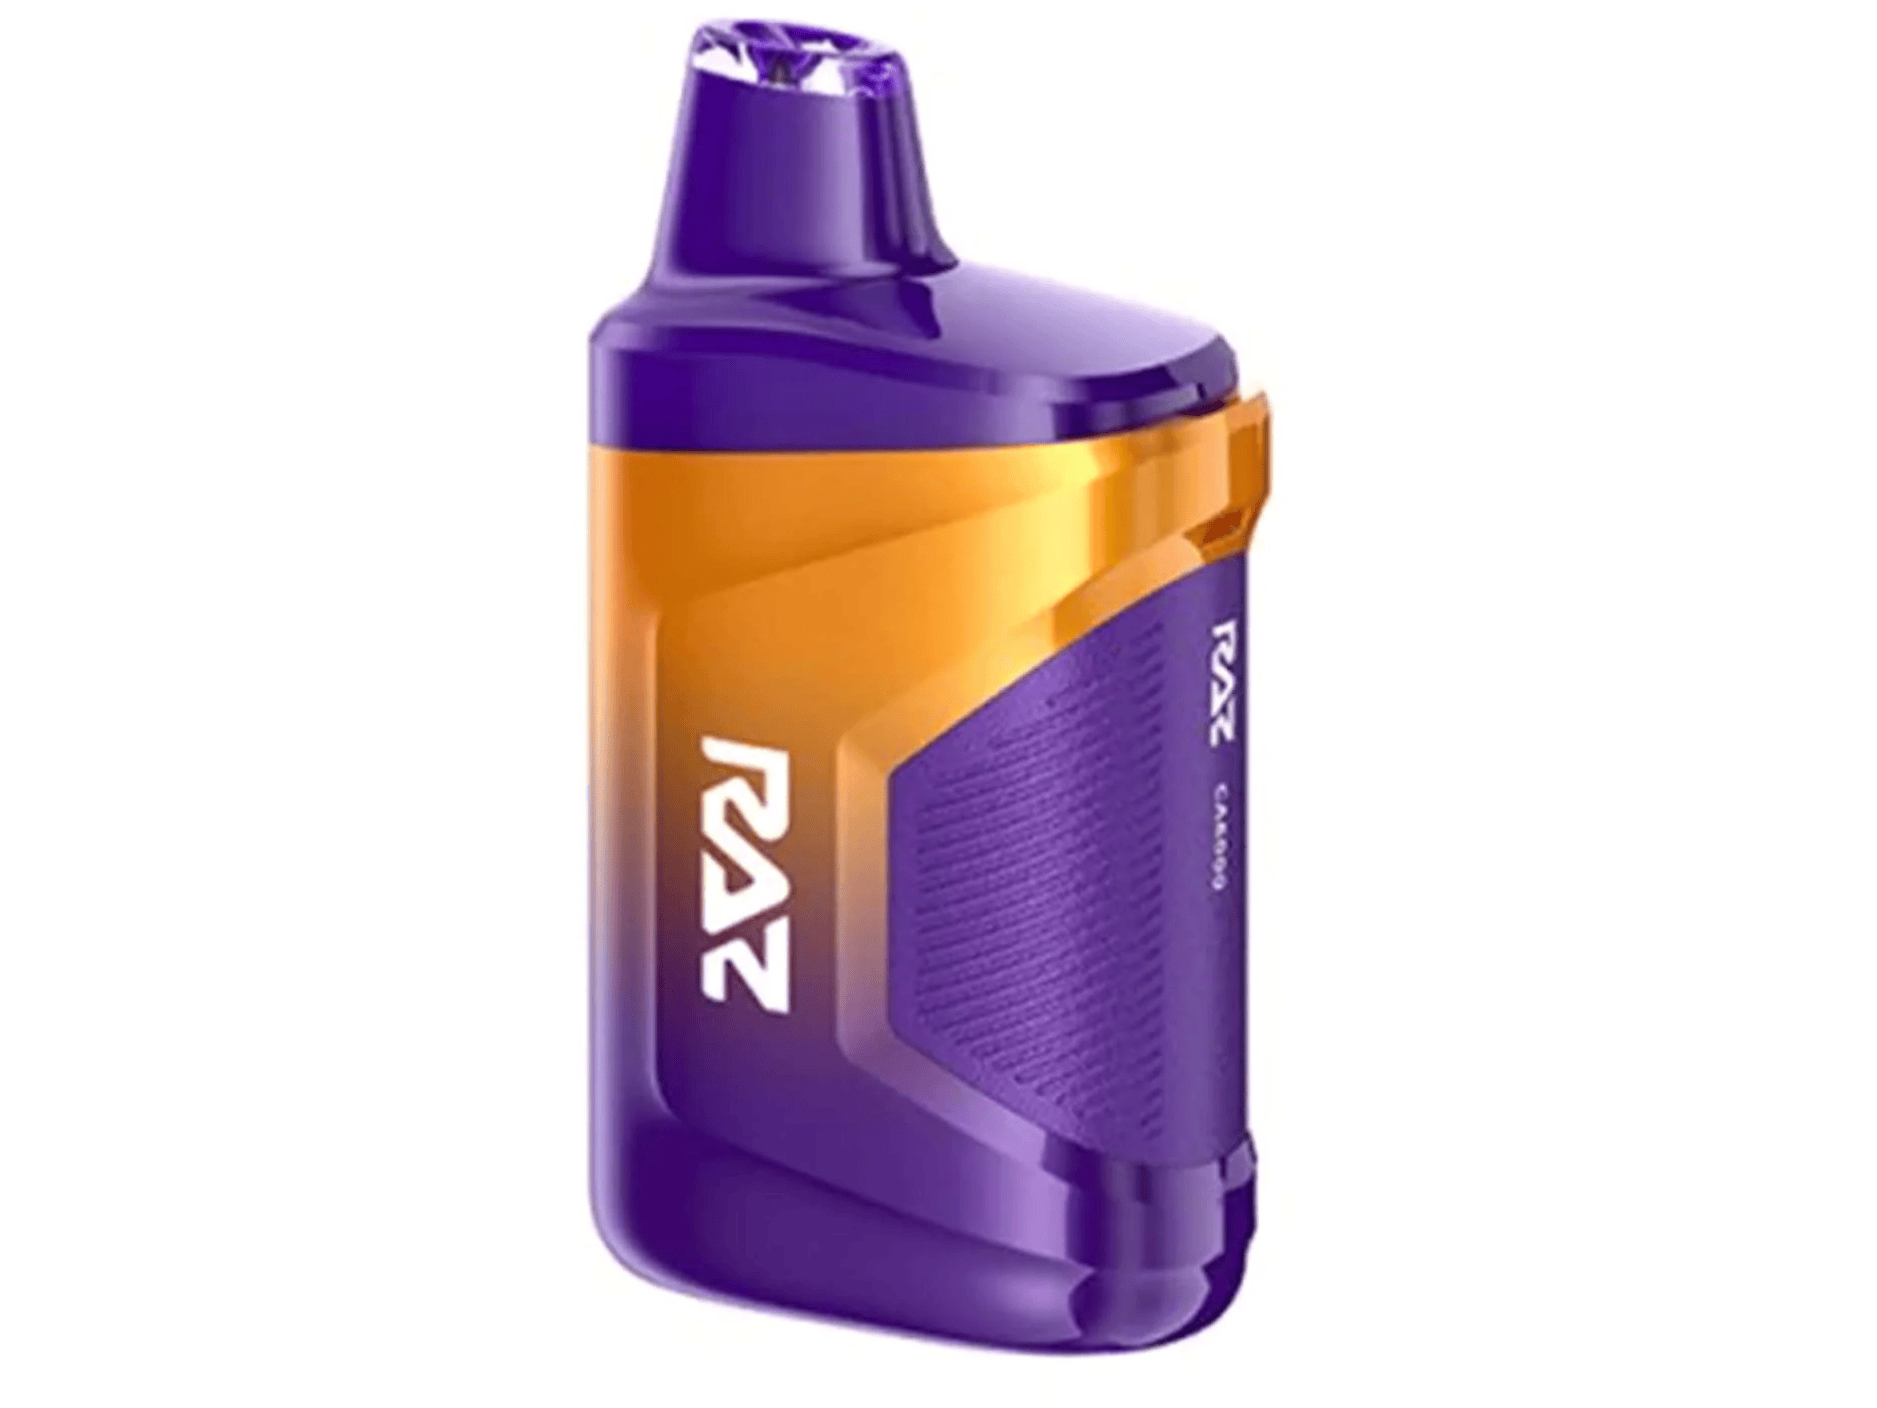 RAZ CA6000 Pom Pom Raz flavored disposable vape device.